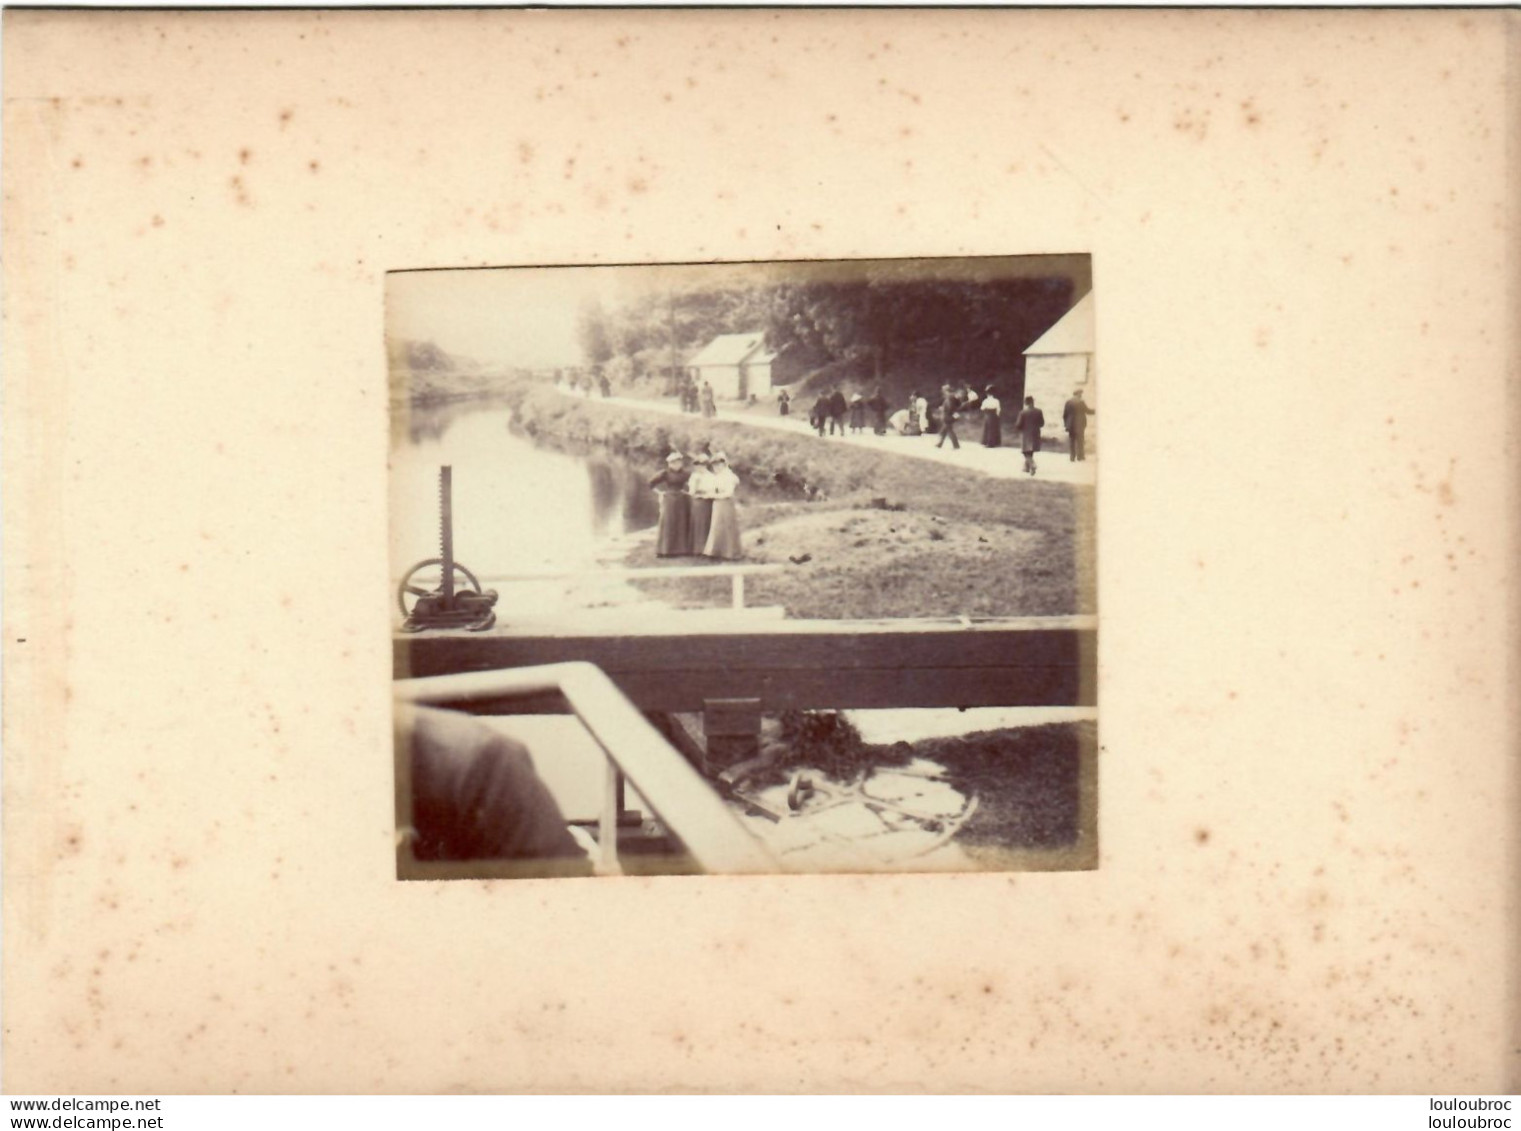 ECOSSE CANAL DE CRINAN ECLUSE N°6 PHOTO ORIGINALE DE 8.50X7 CM COLLEE SUR CARTON 18X13CM - Oud (voor 1900)